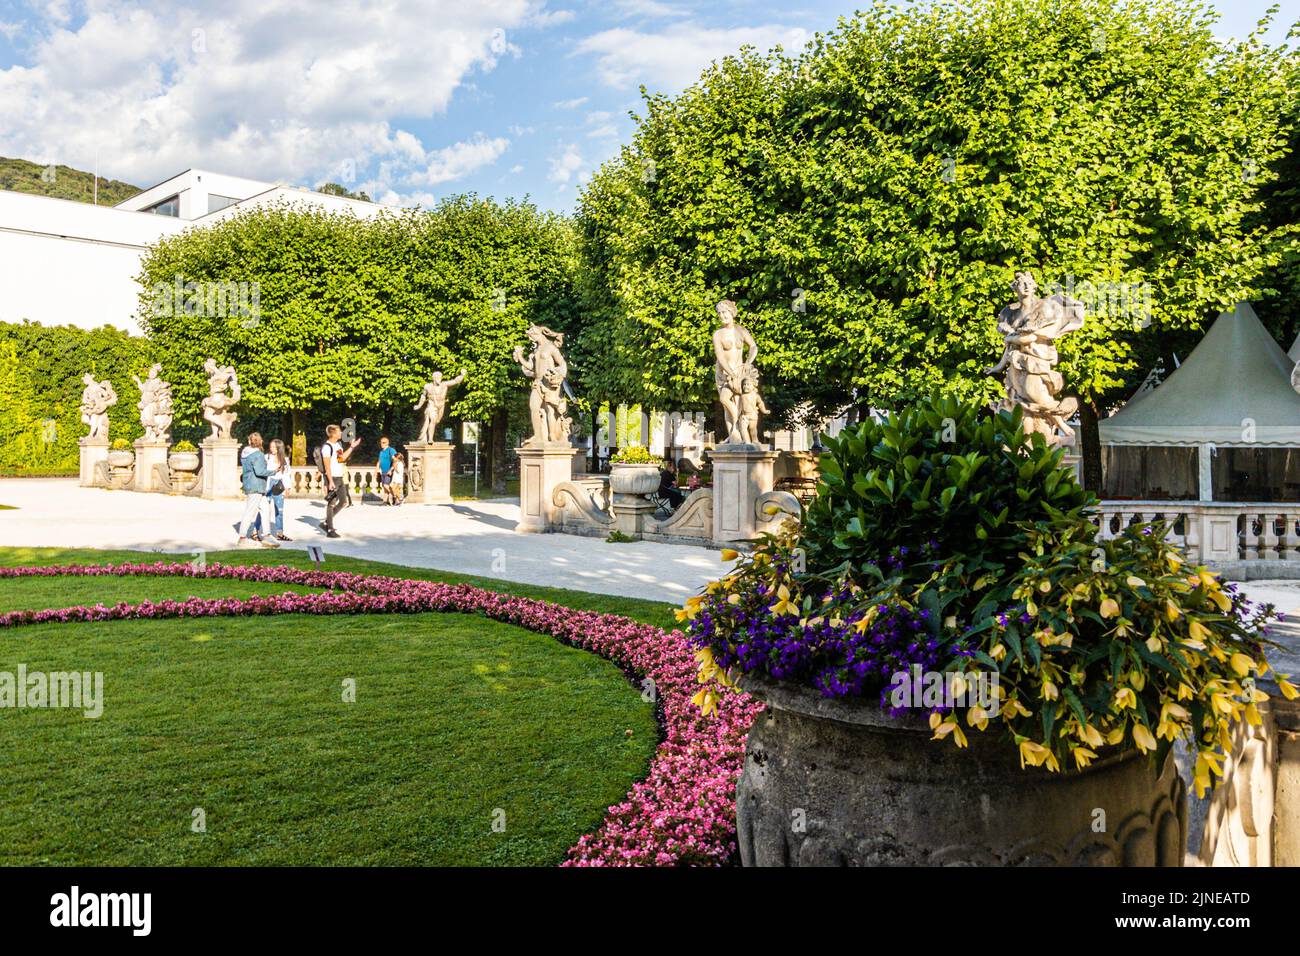 people enjoying bwalking around the famous Mirabelle gardens, Salzburg, Austria Stock Photo